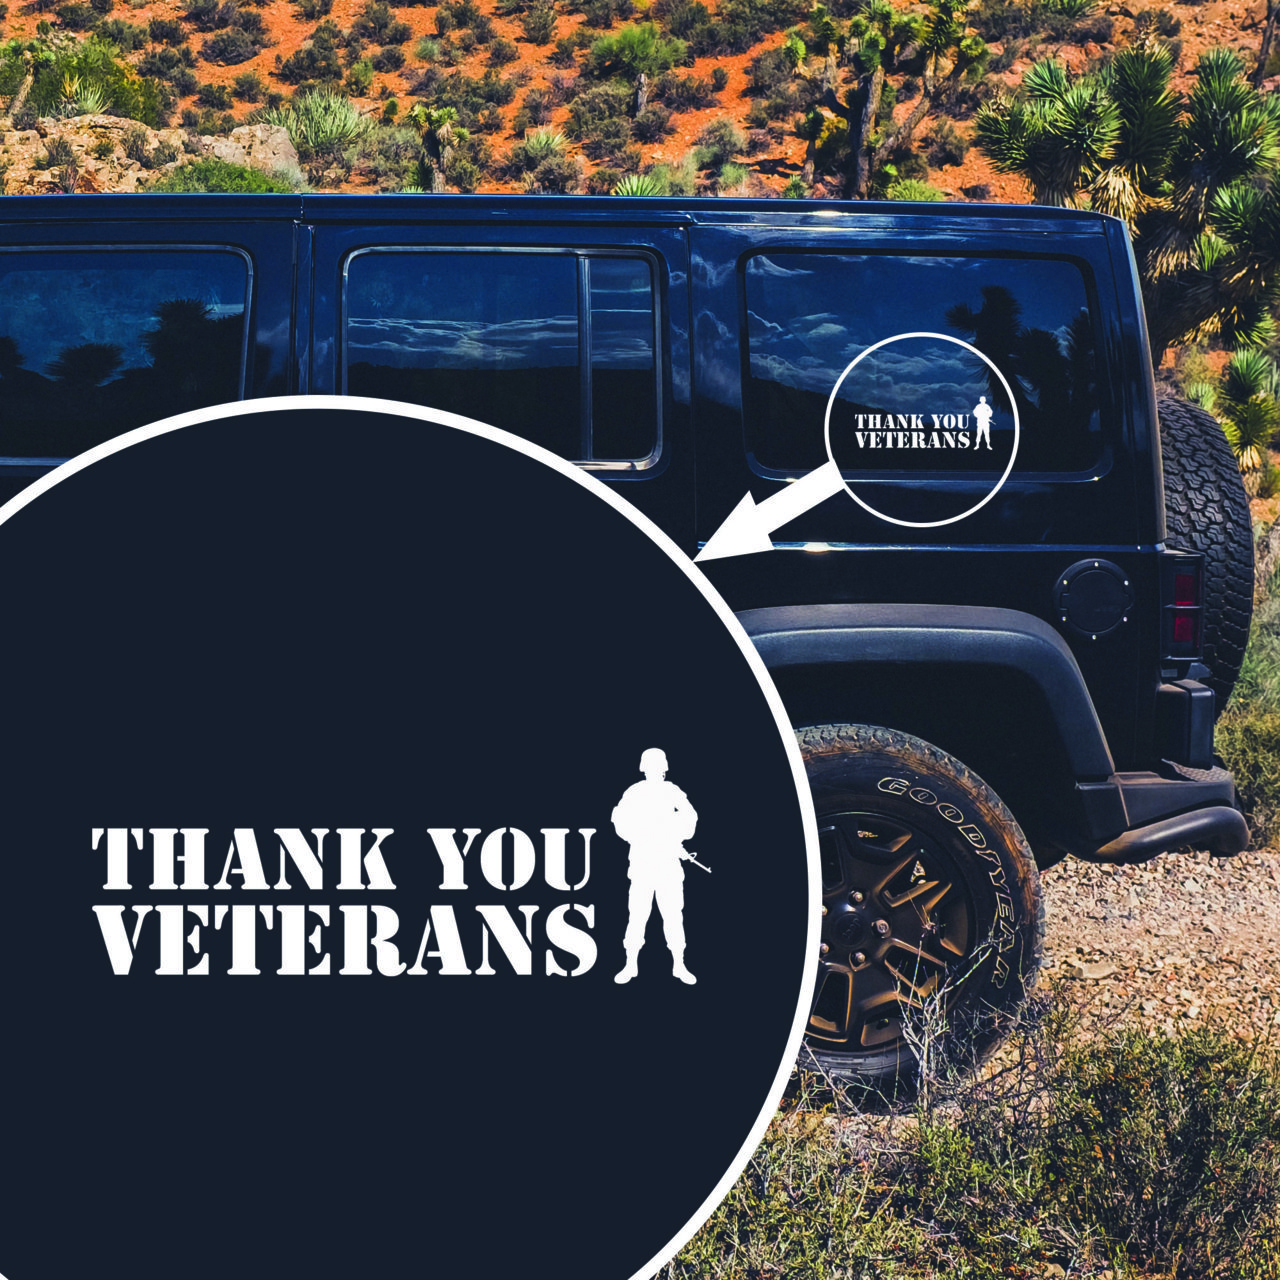 Thank you veterans Thumbnail.jpg